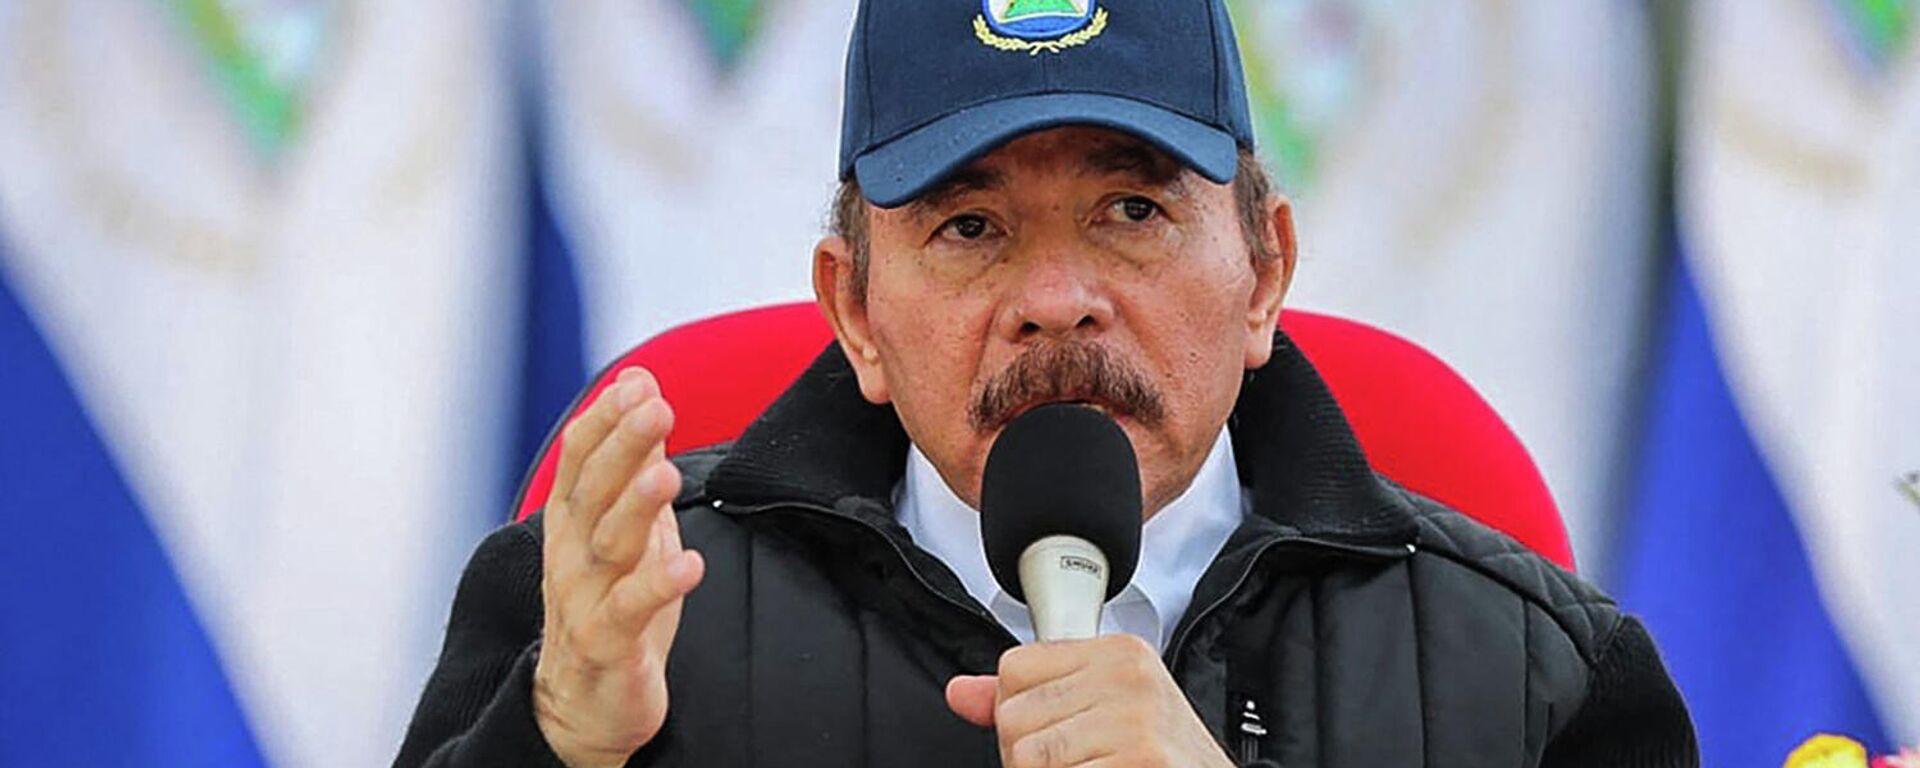 Daniel Ortega, presidente de Nicaragua - Sputnik Mundo, 1920, 11.09.2021